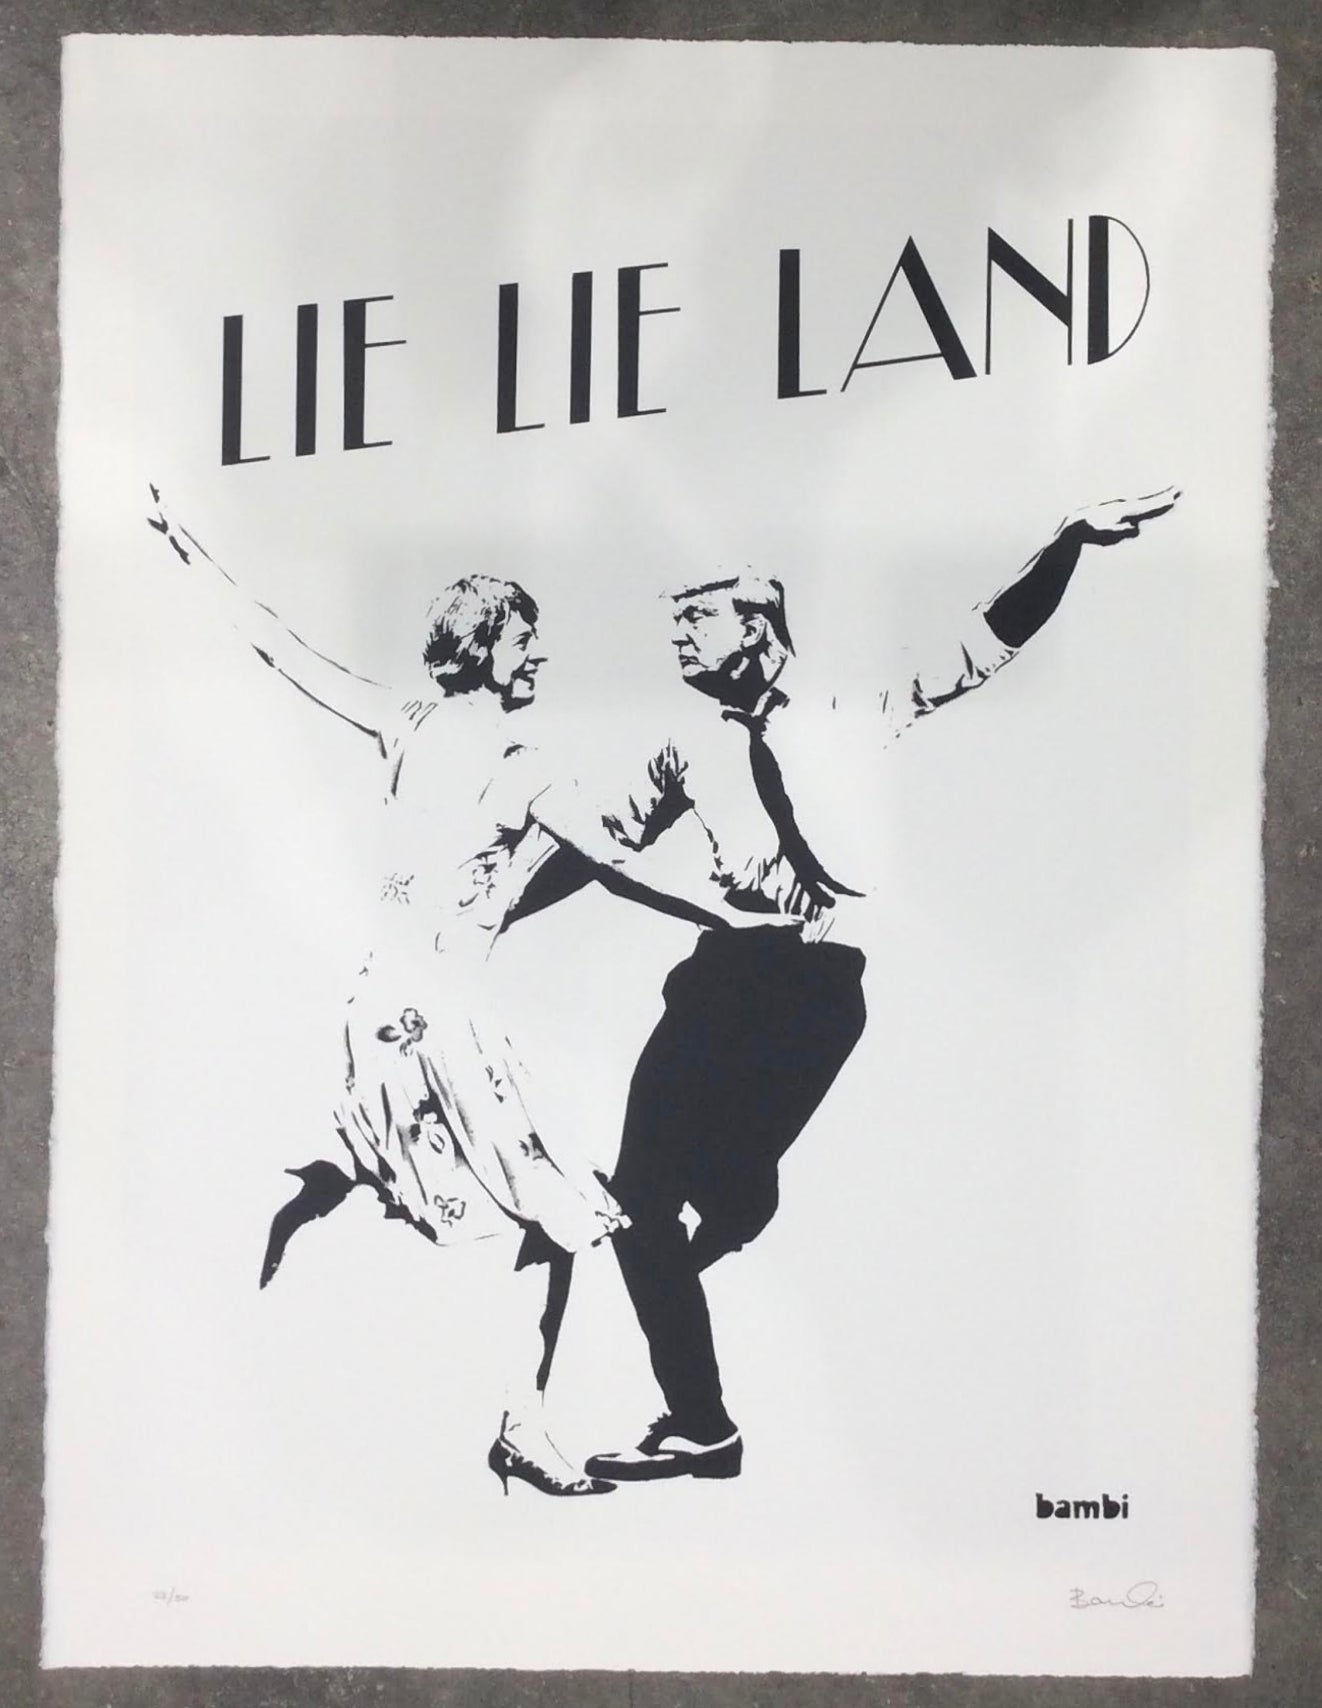 Bambi Lie Lie Land (White) 2017